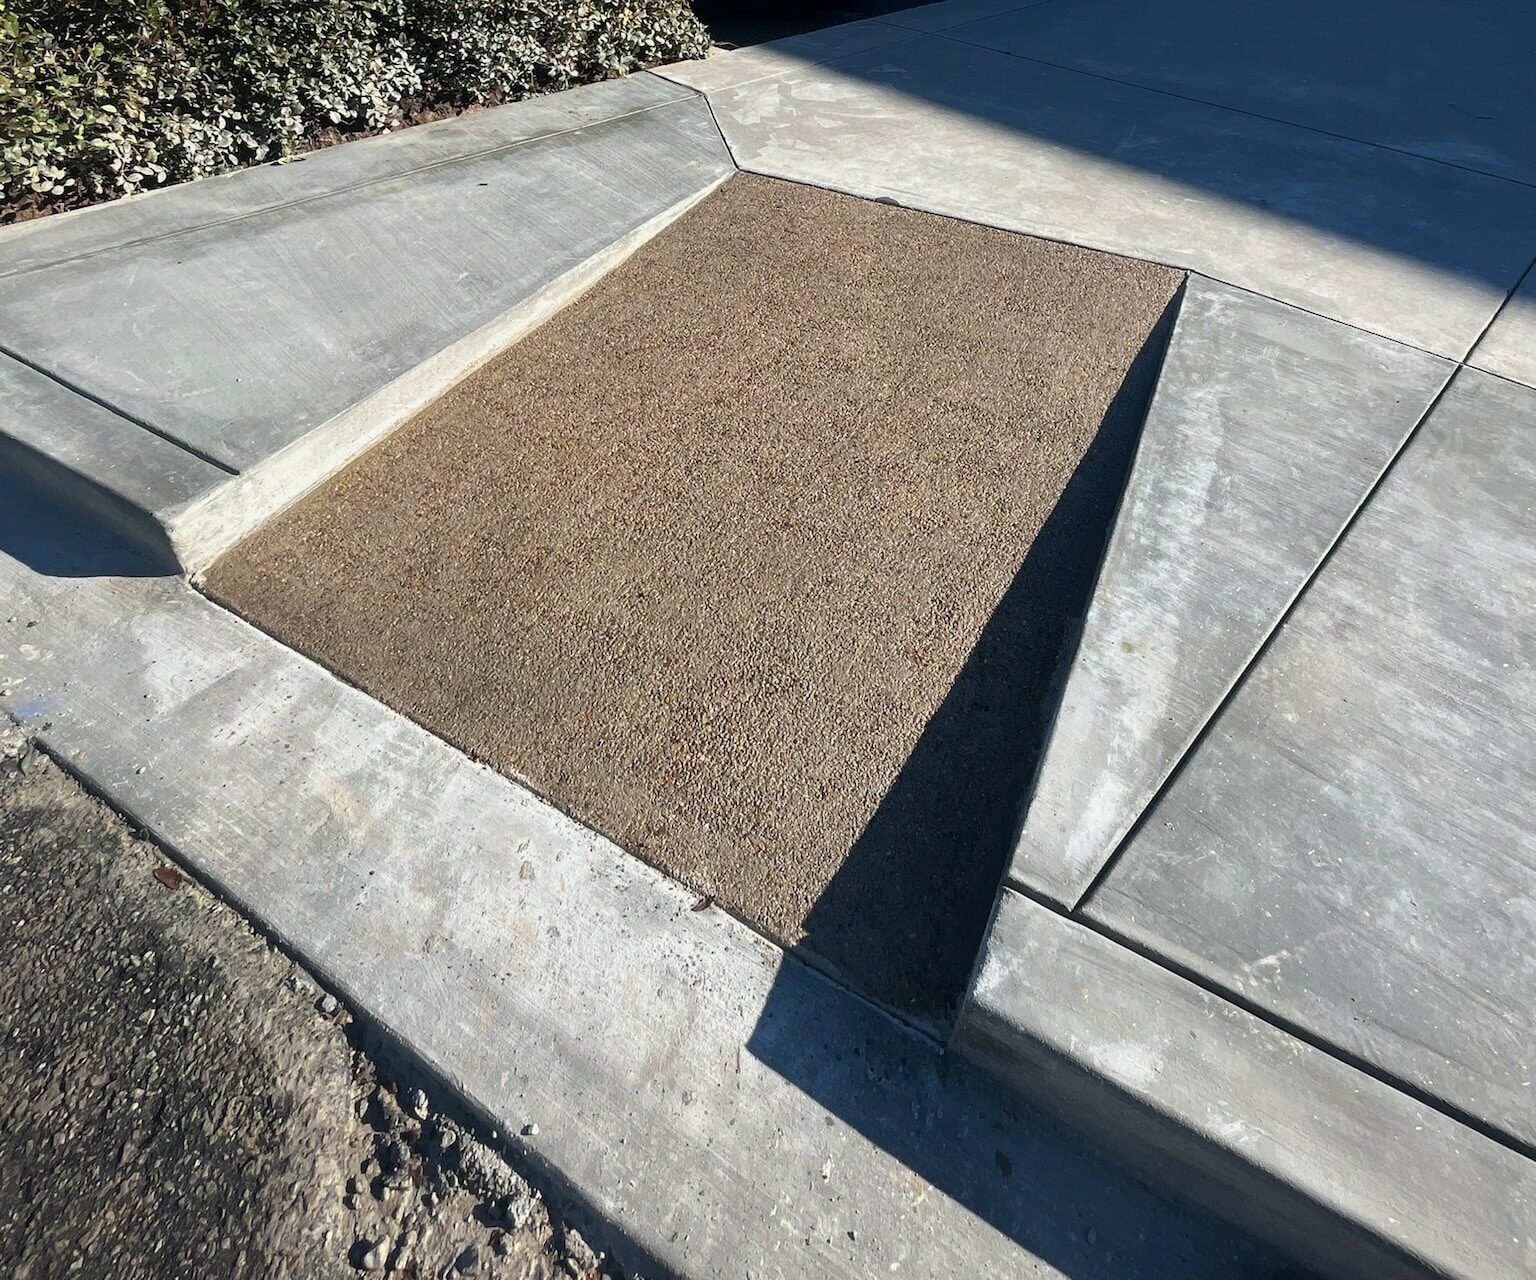 Exposed Aggregate Concrete Finish on Concrete ADA Ramp